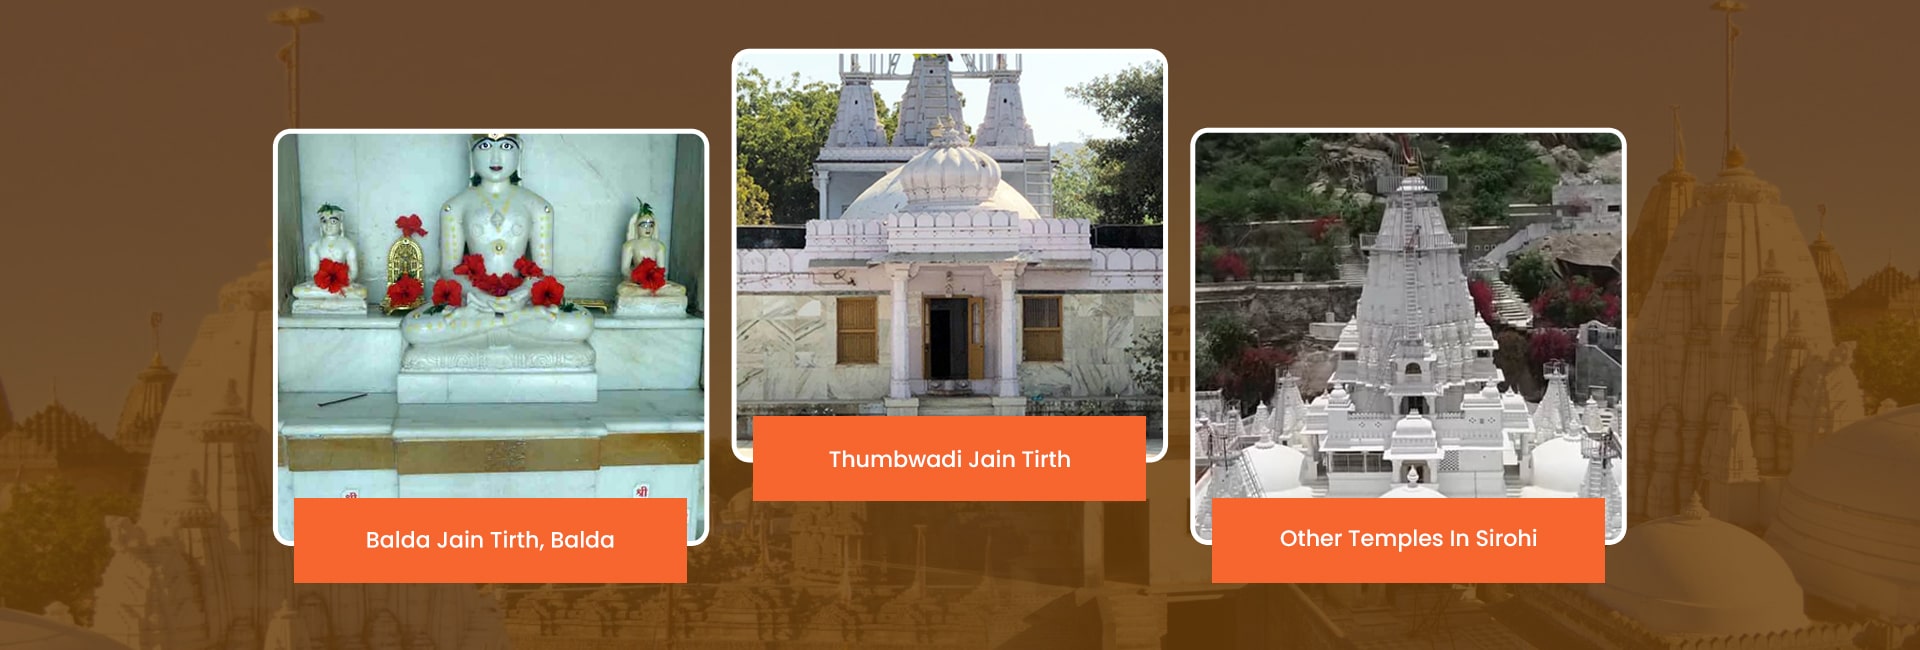 Balda Jain Tirth - Thumbwadi Jain Tirth - Other Temples Sirohi